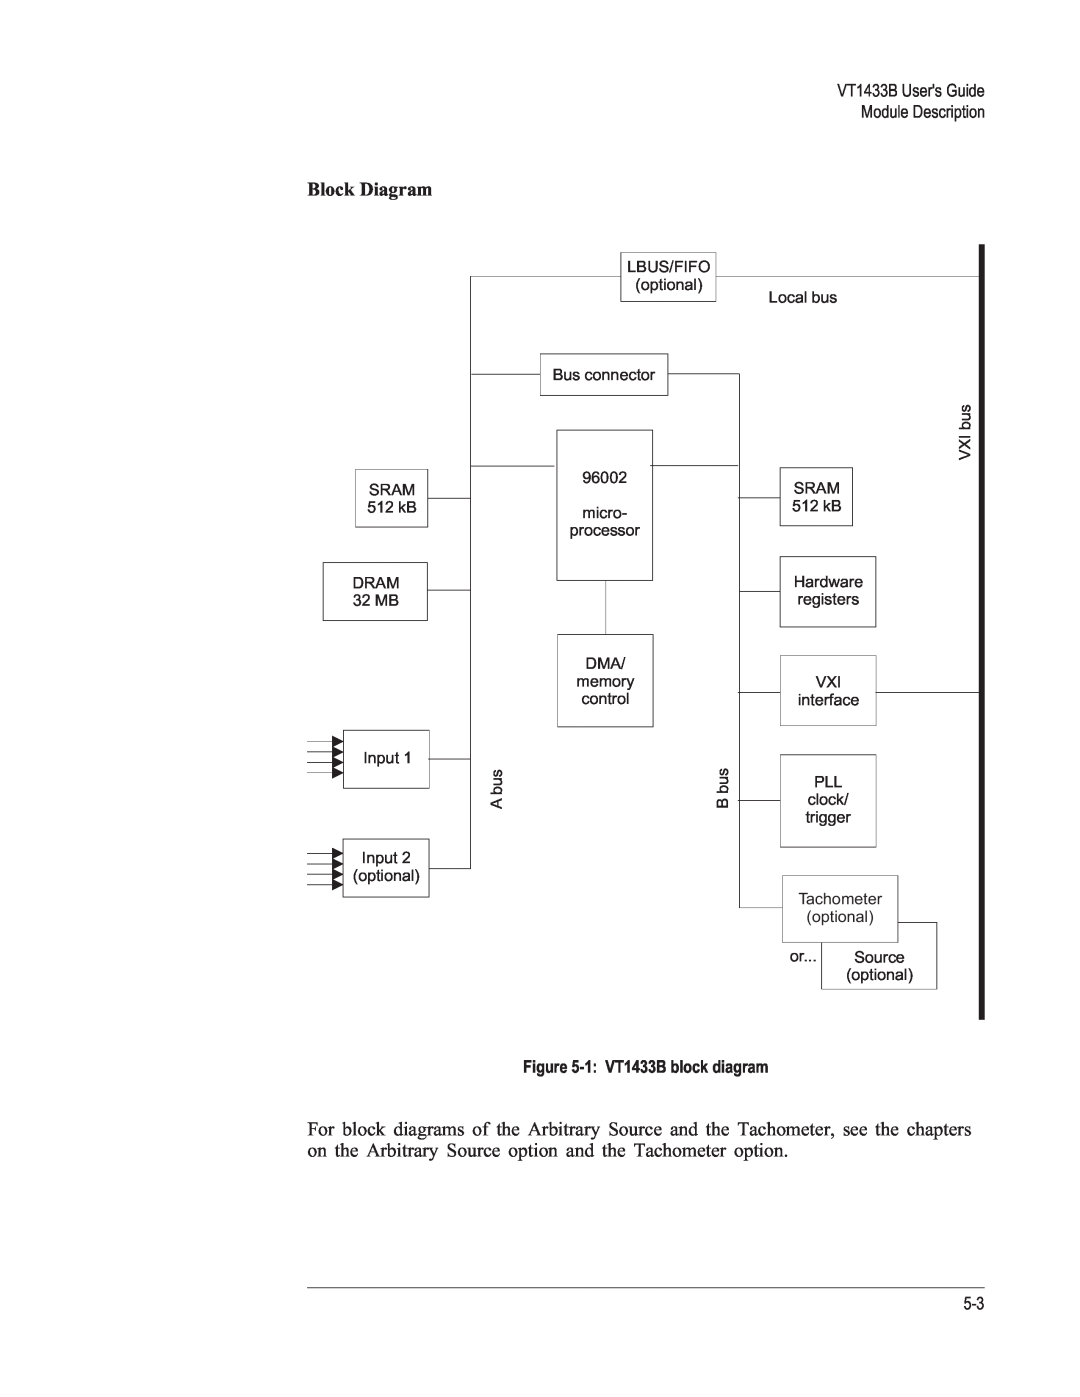 VXI manual Block Diagram, 1:VT1433B block diagram 